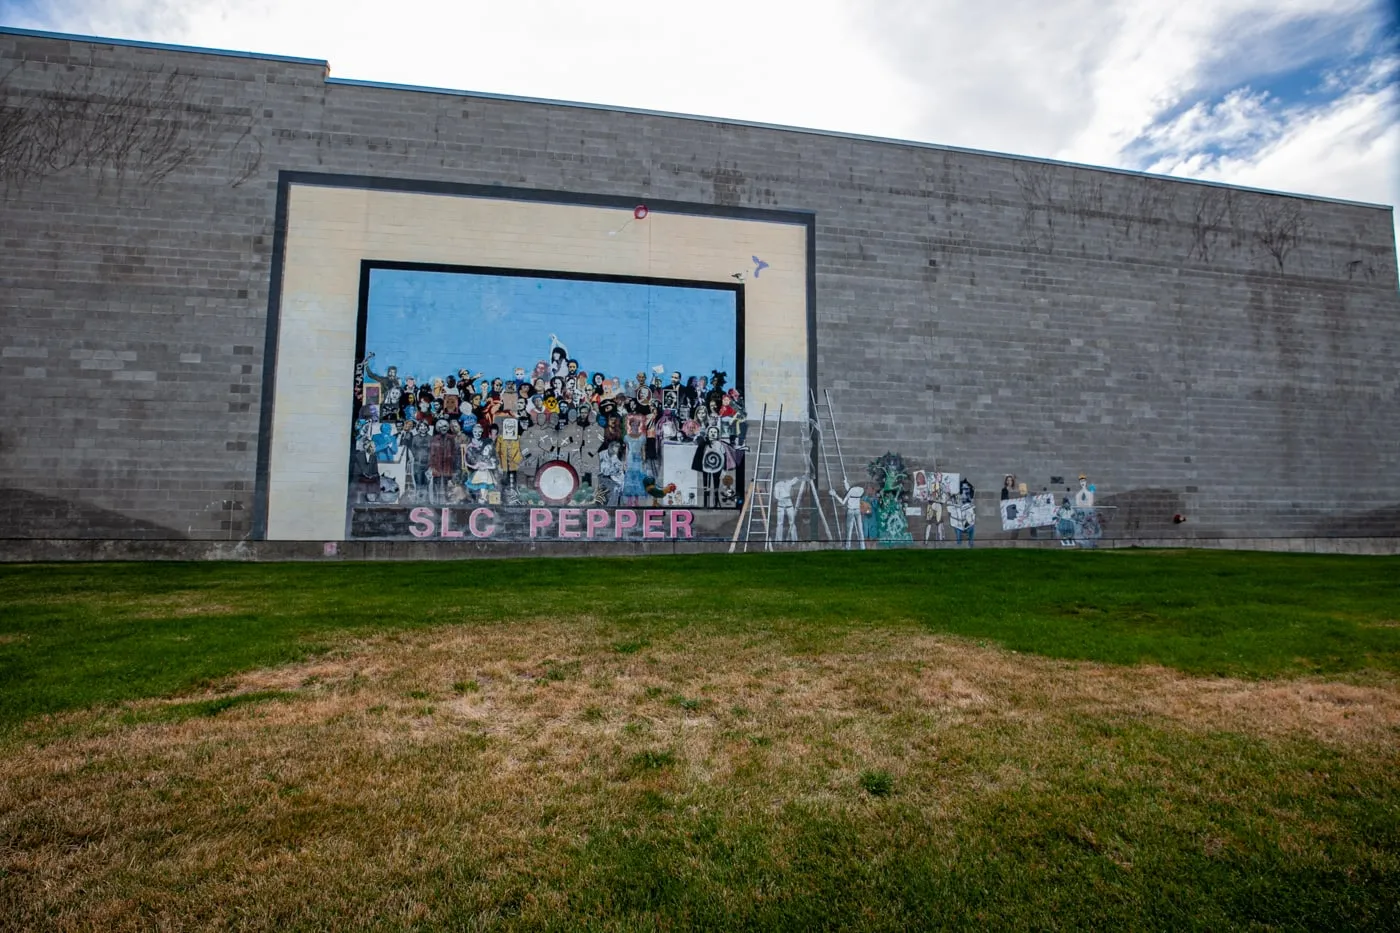 SLC Pepper Mural in Salt Lake City, Utah | Street art in Salt Lake City, Utah